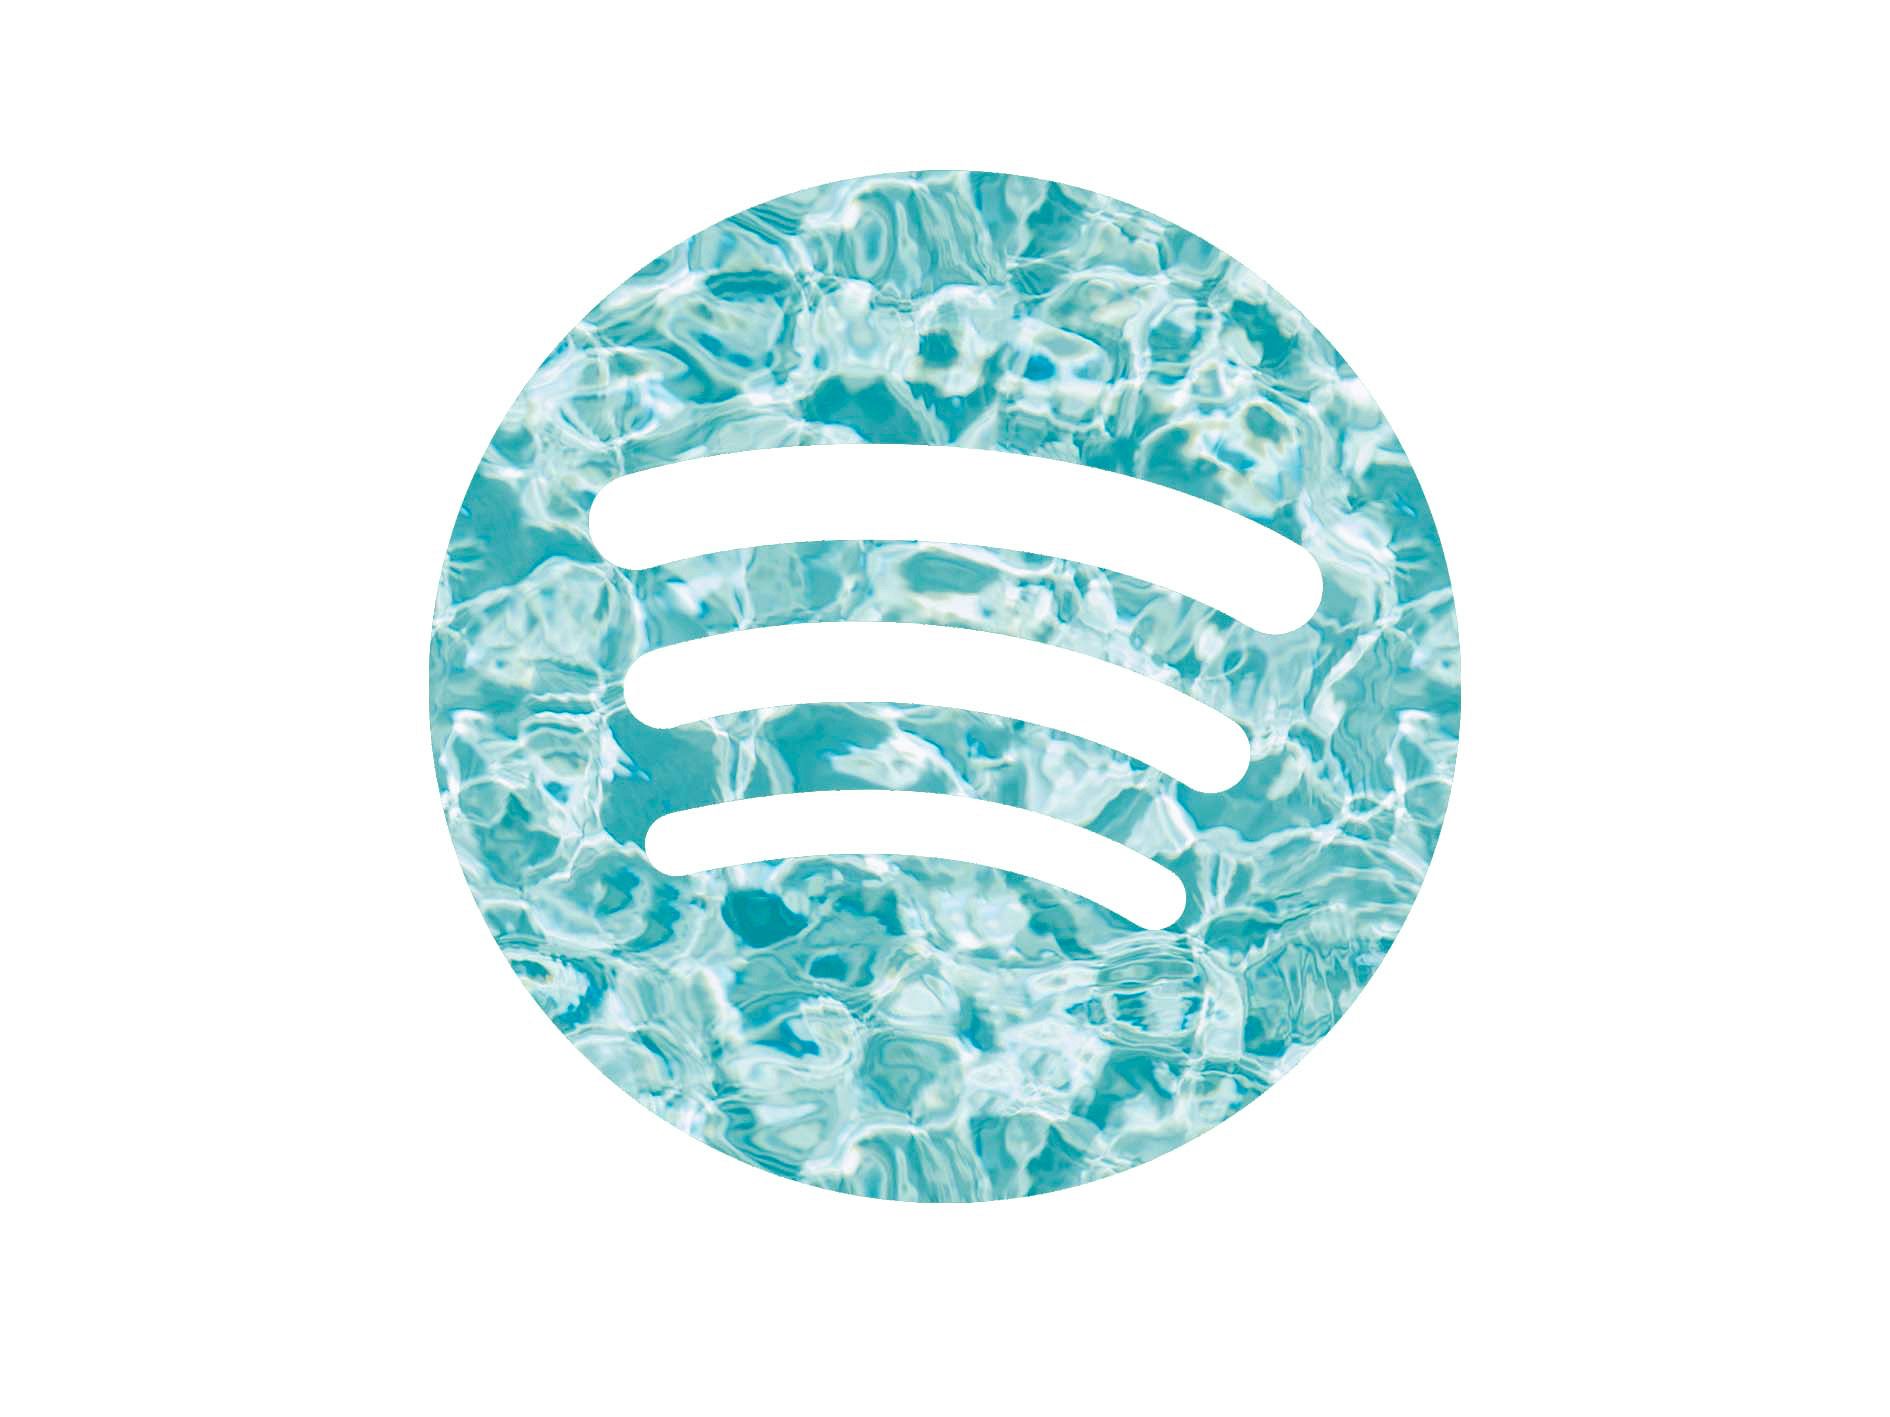 My Spotify logo designs